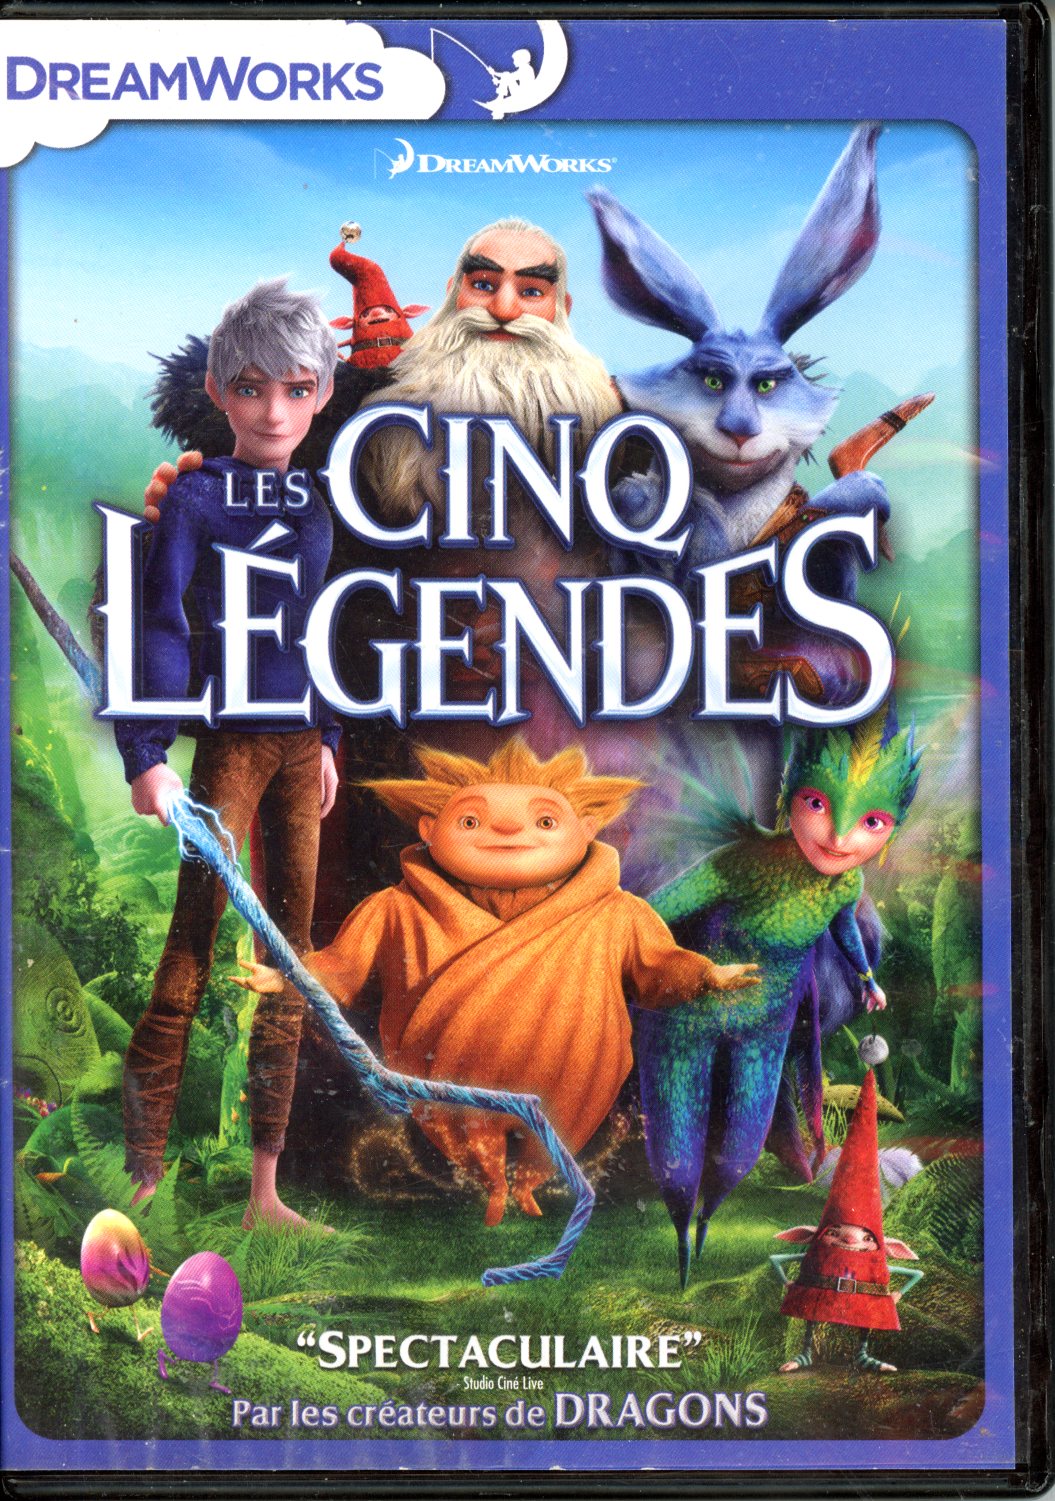 LES CINO LEGENDES - DREAMWORKS - dvd occasion